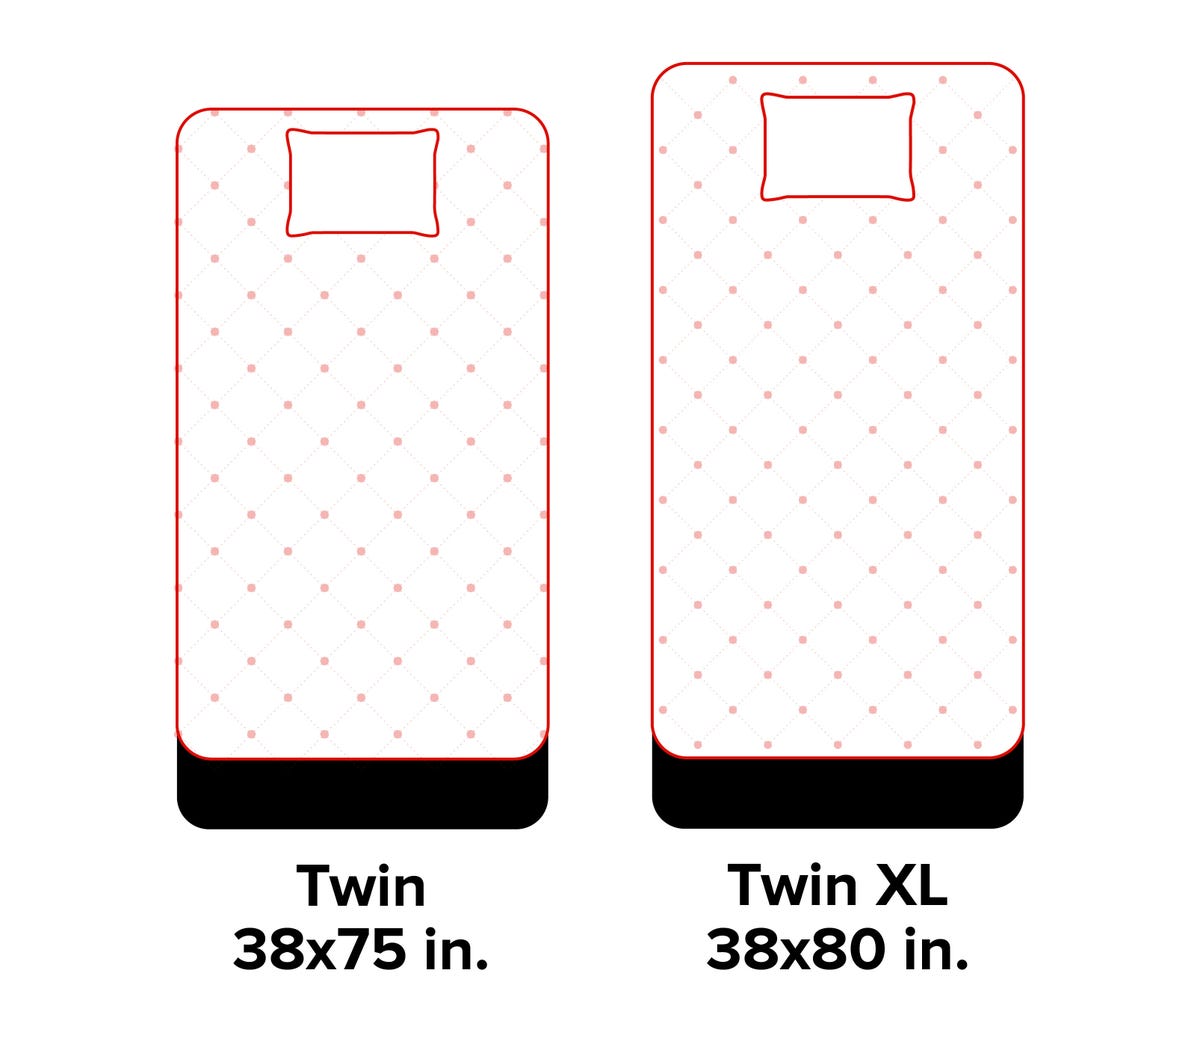 mattress-size-guide-graphic-cnet-twin-twin-xl